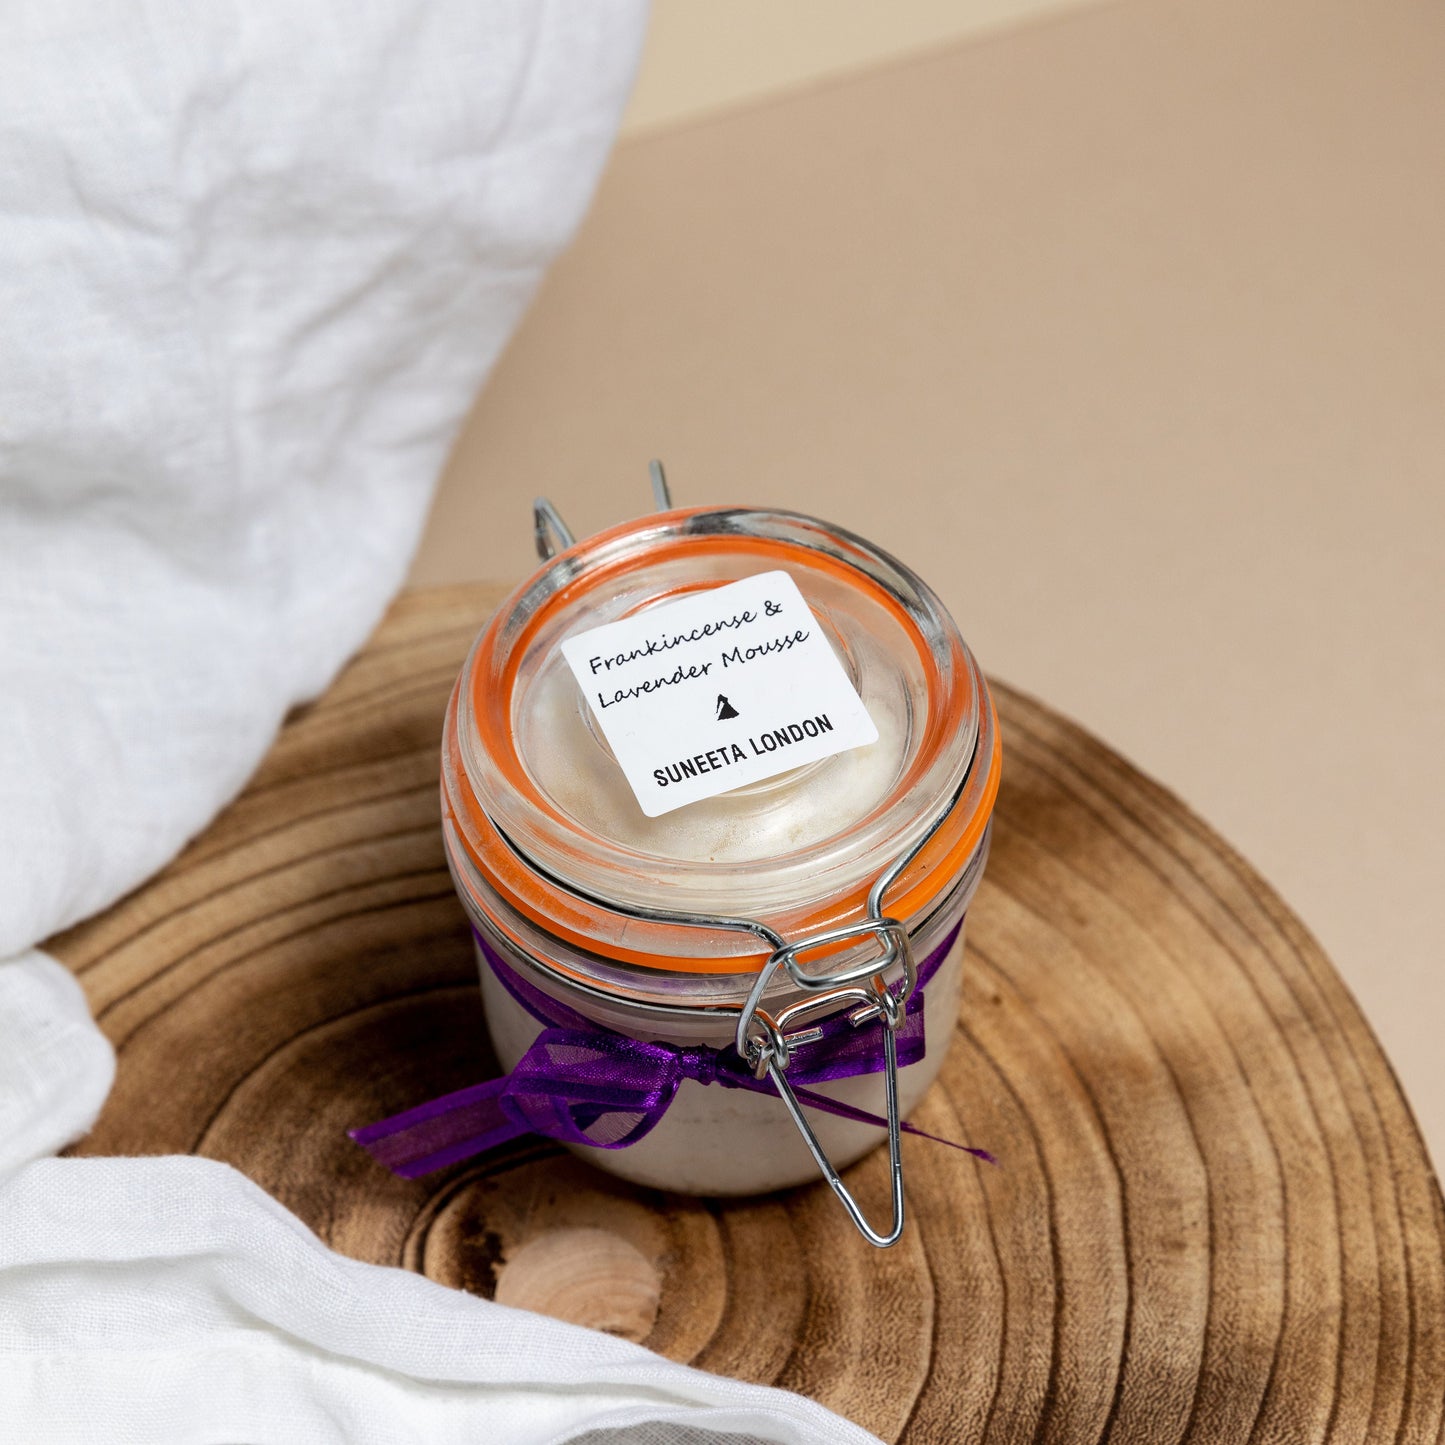 frankincense & lavender body mousse suneeta london, 175g kilner jar